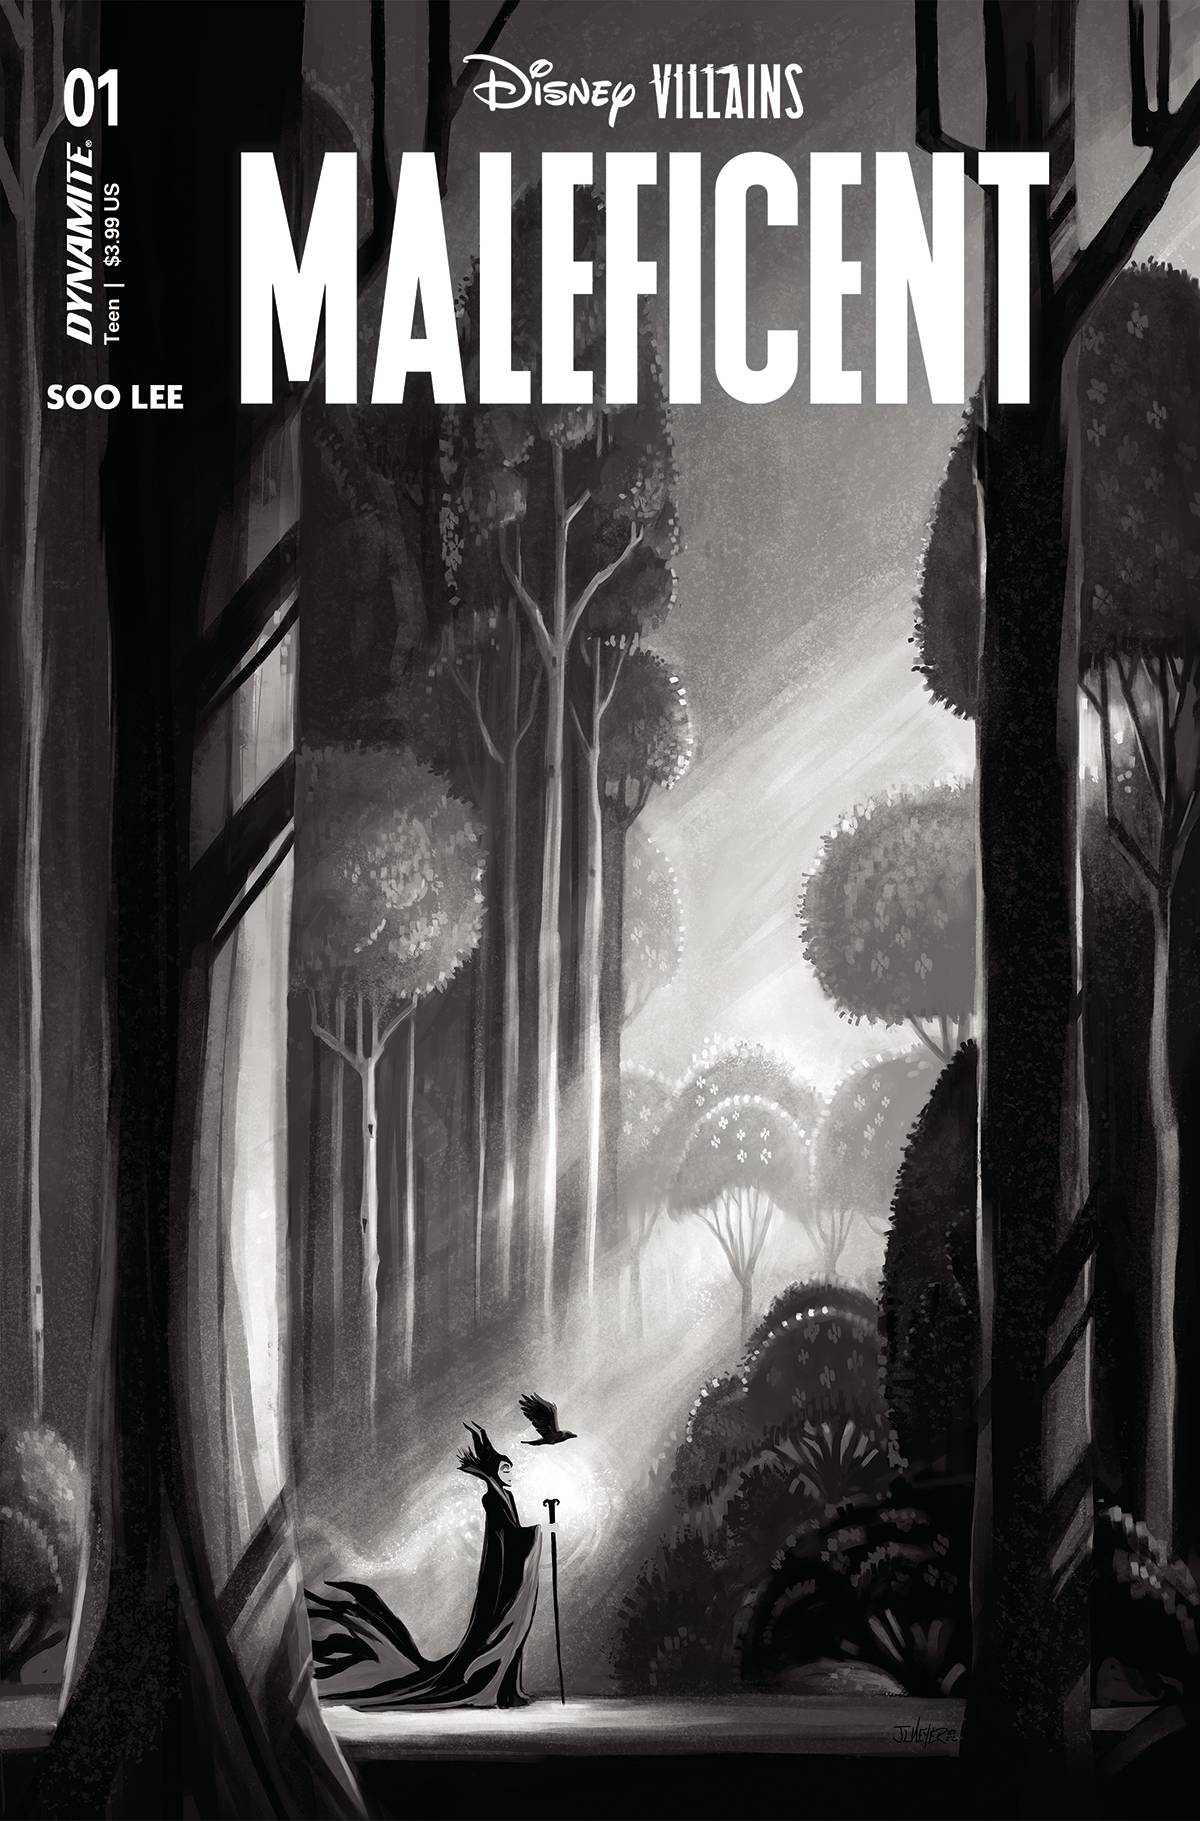 Disney Villains Maleficent #1 Cover Zb 10 Copy Last Call Incentive Meyer Black & White